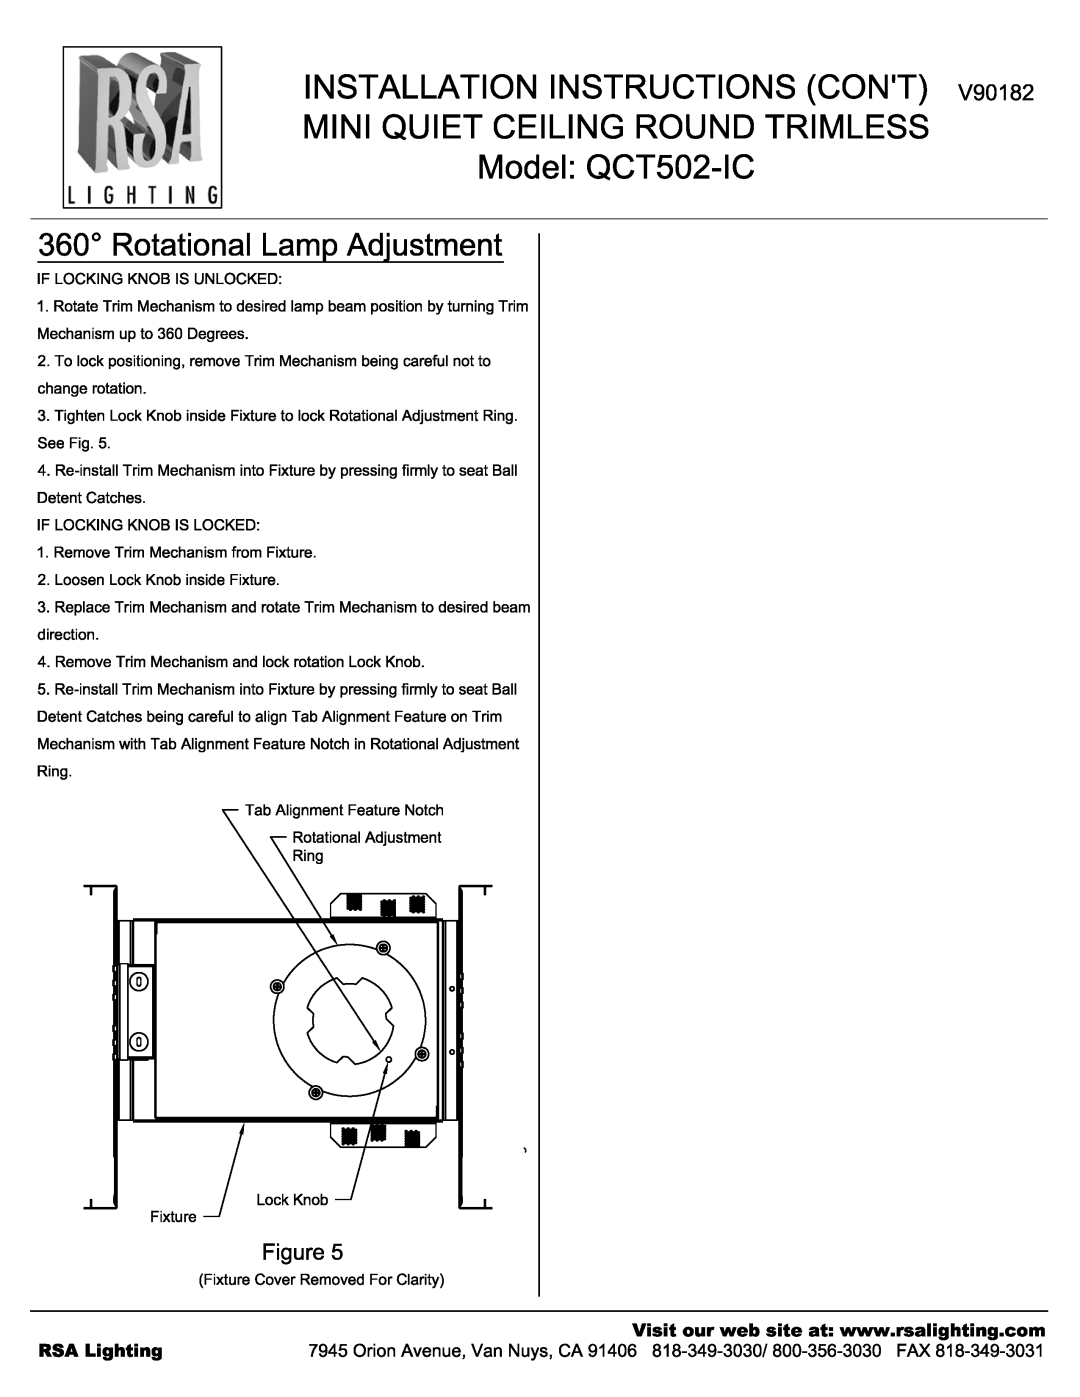 Cooper Lighting QCT502-IC manual 